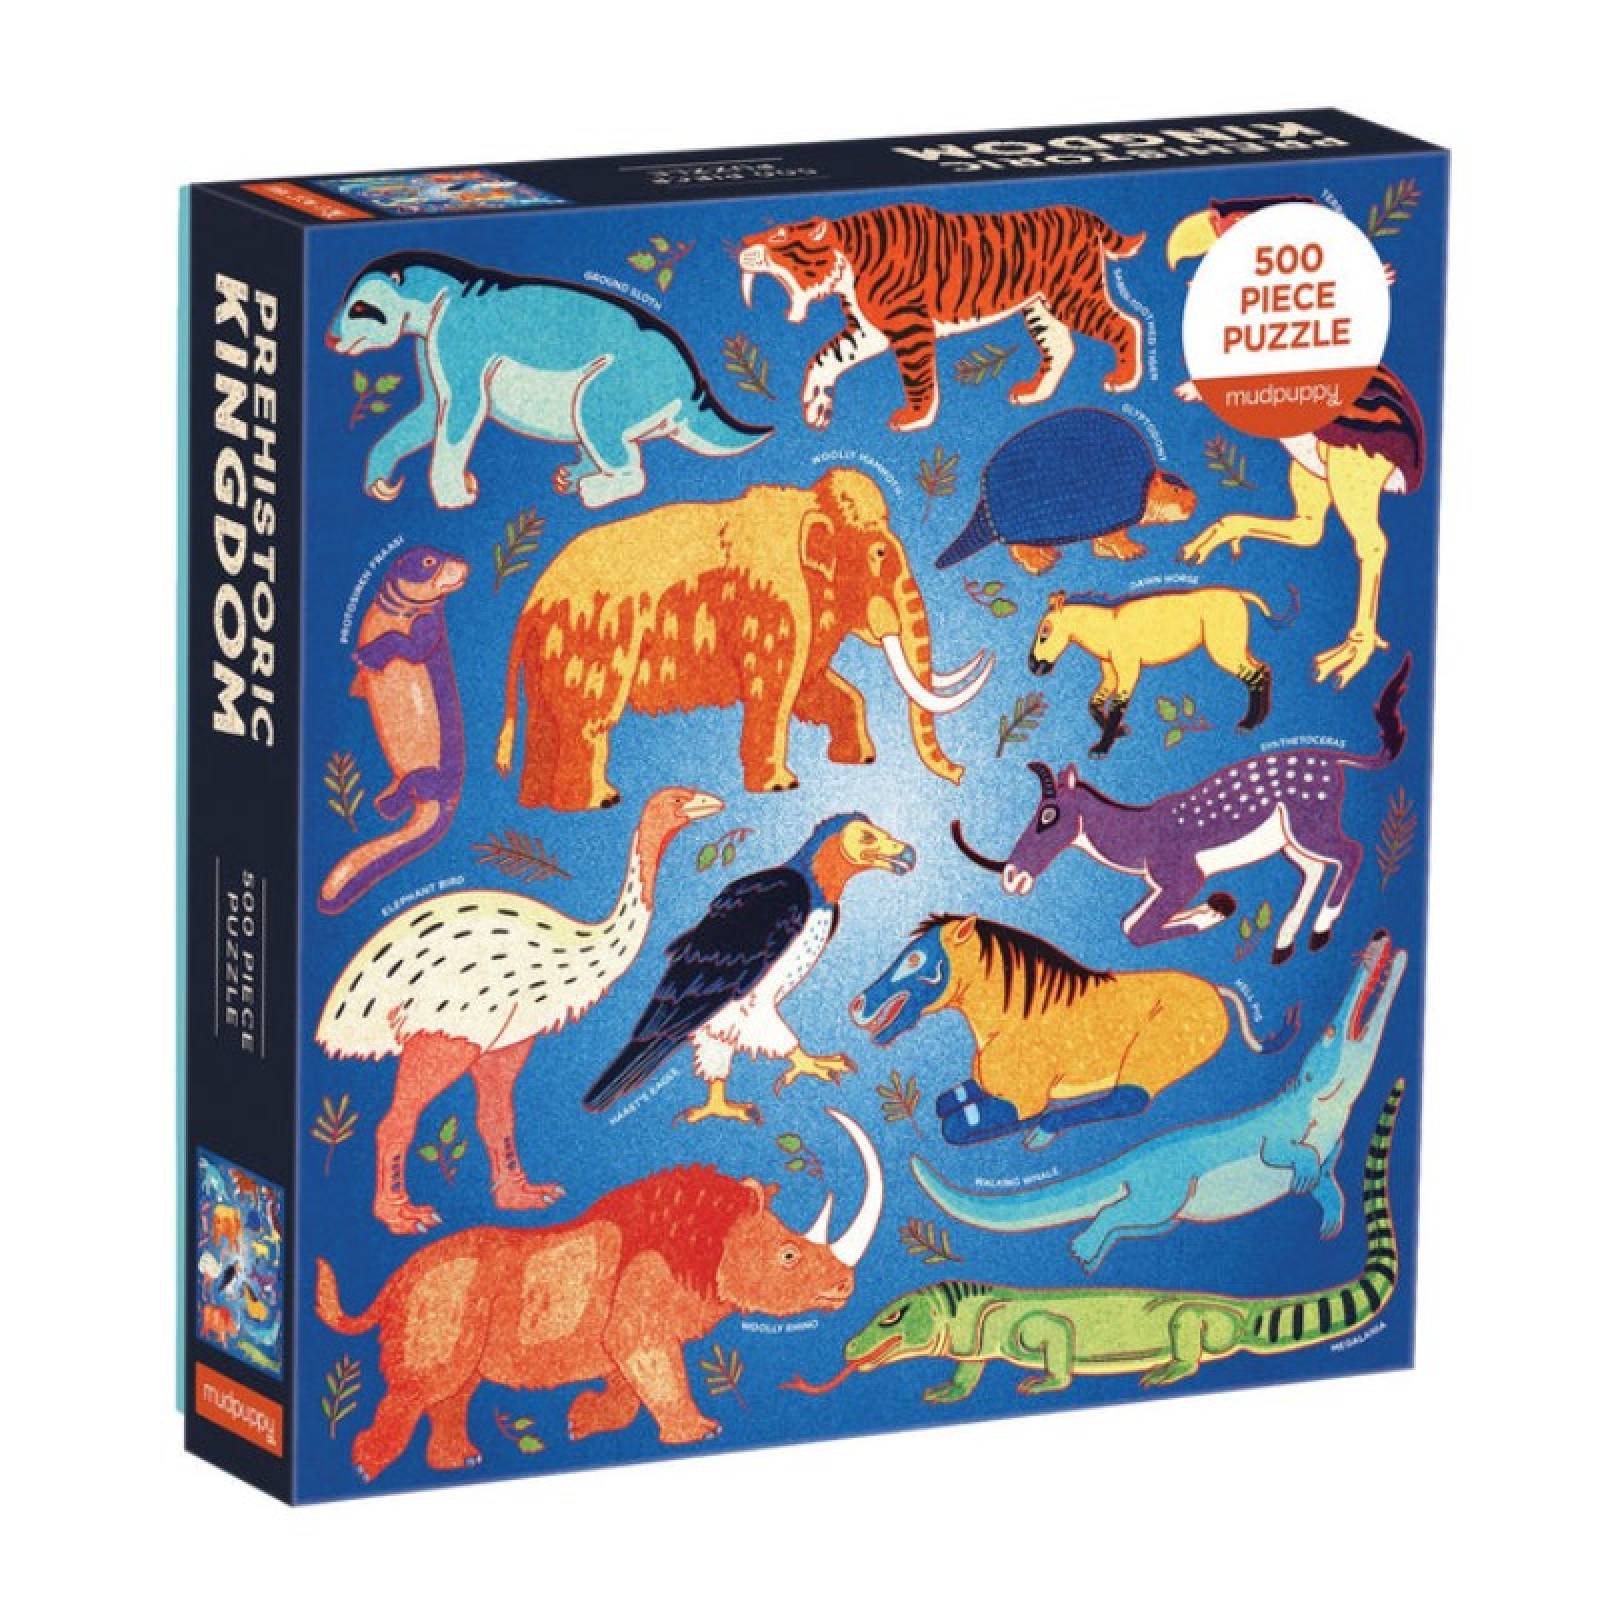 Prehistoric Kingdom - 500 Piece Jigsaw Puzzle thumbnails